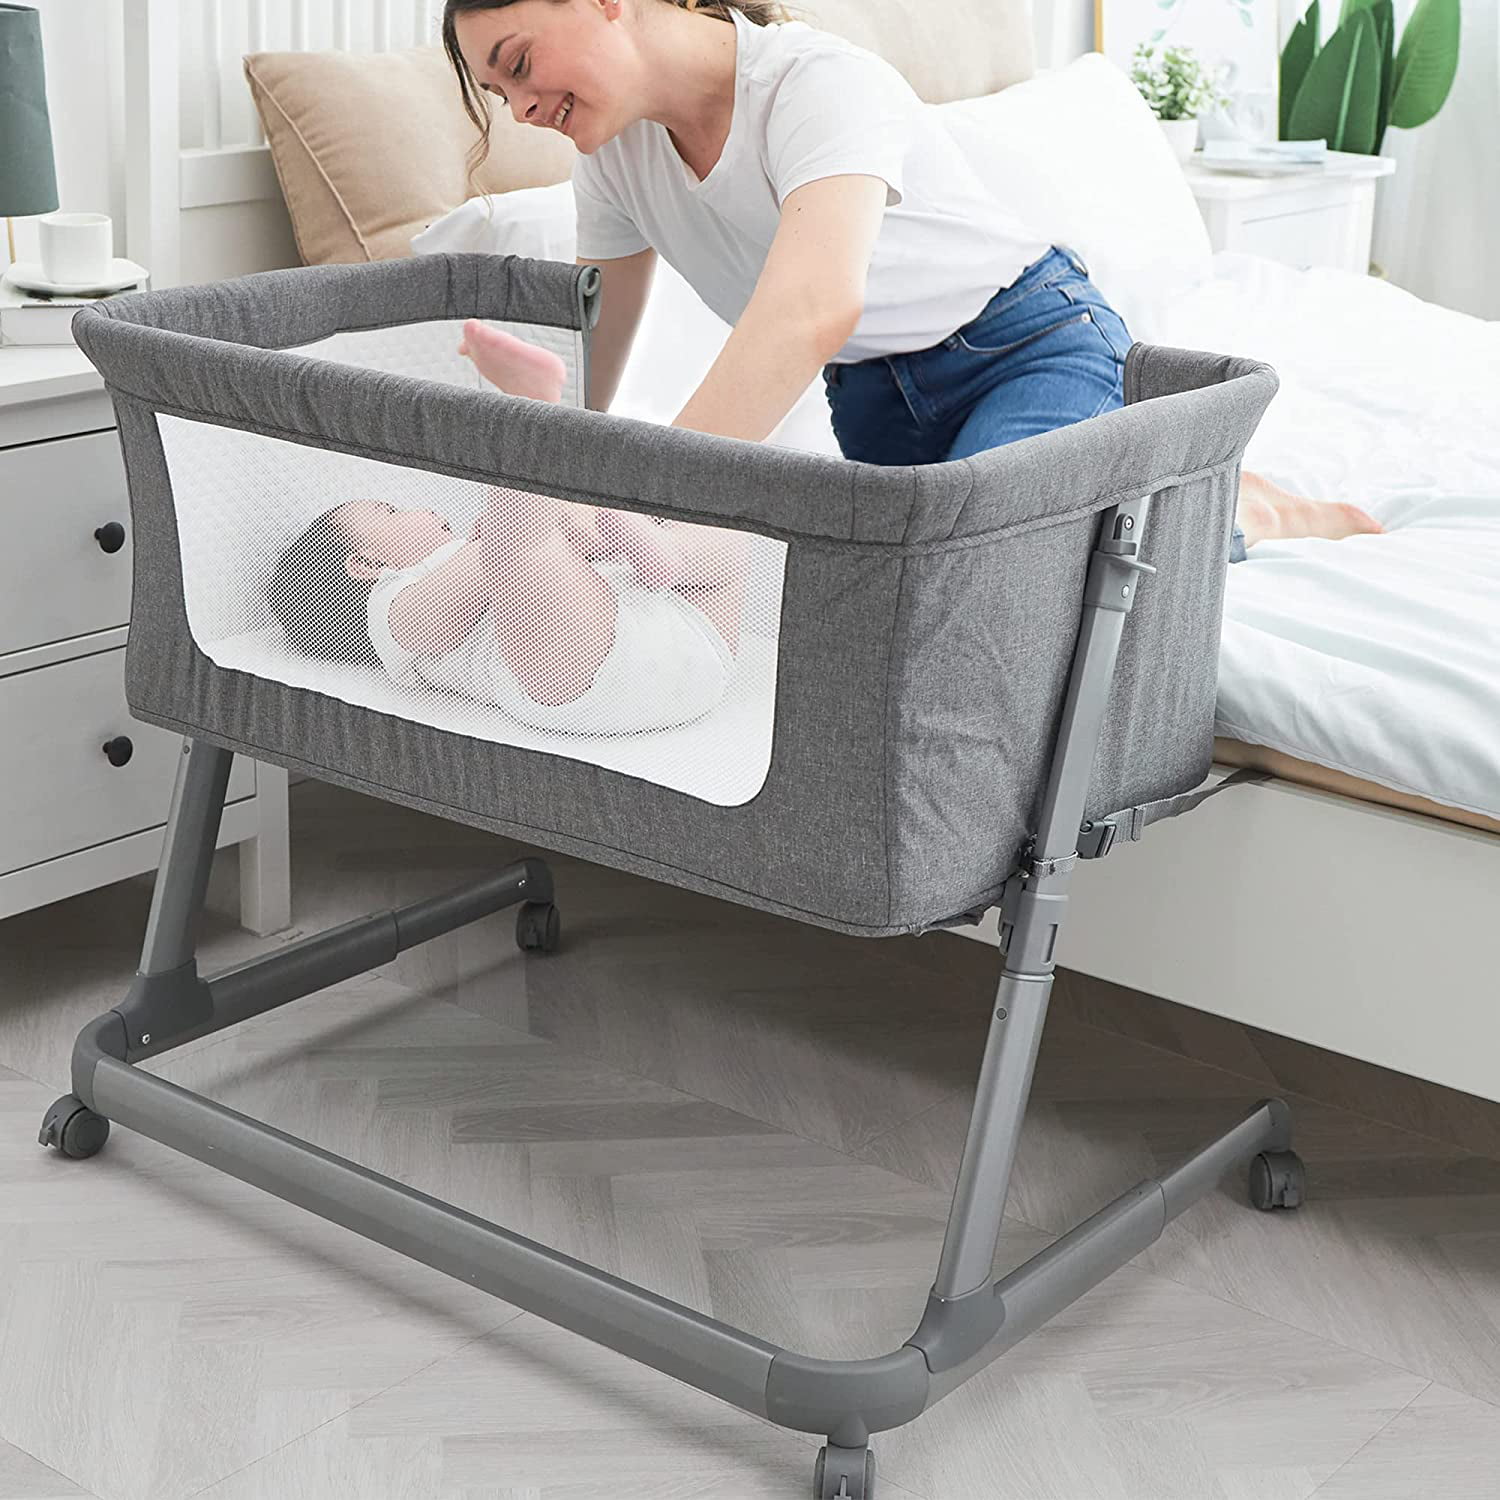 Pamo Babe Unisex Bedside Sleeper Infant Bassinet with Wheels and Floding Frame (Grey) - 1